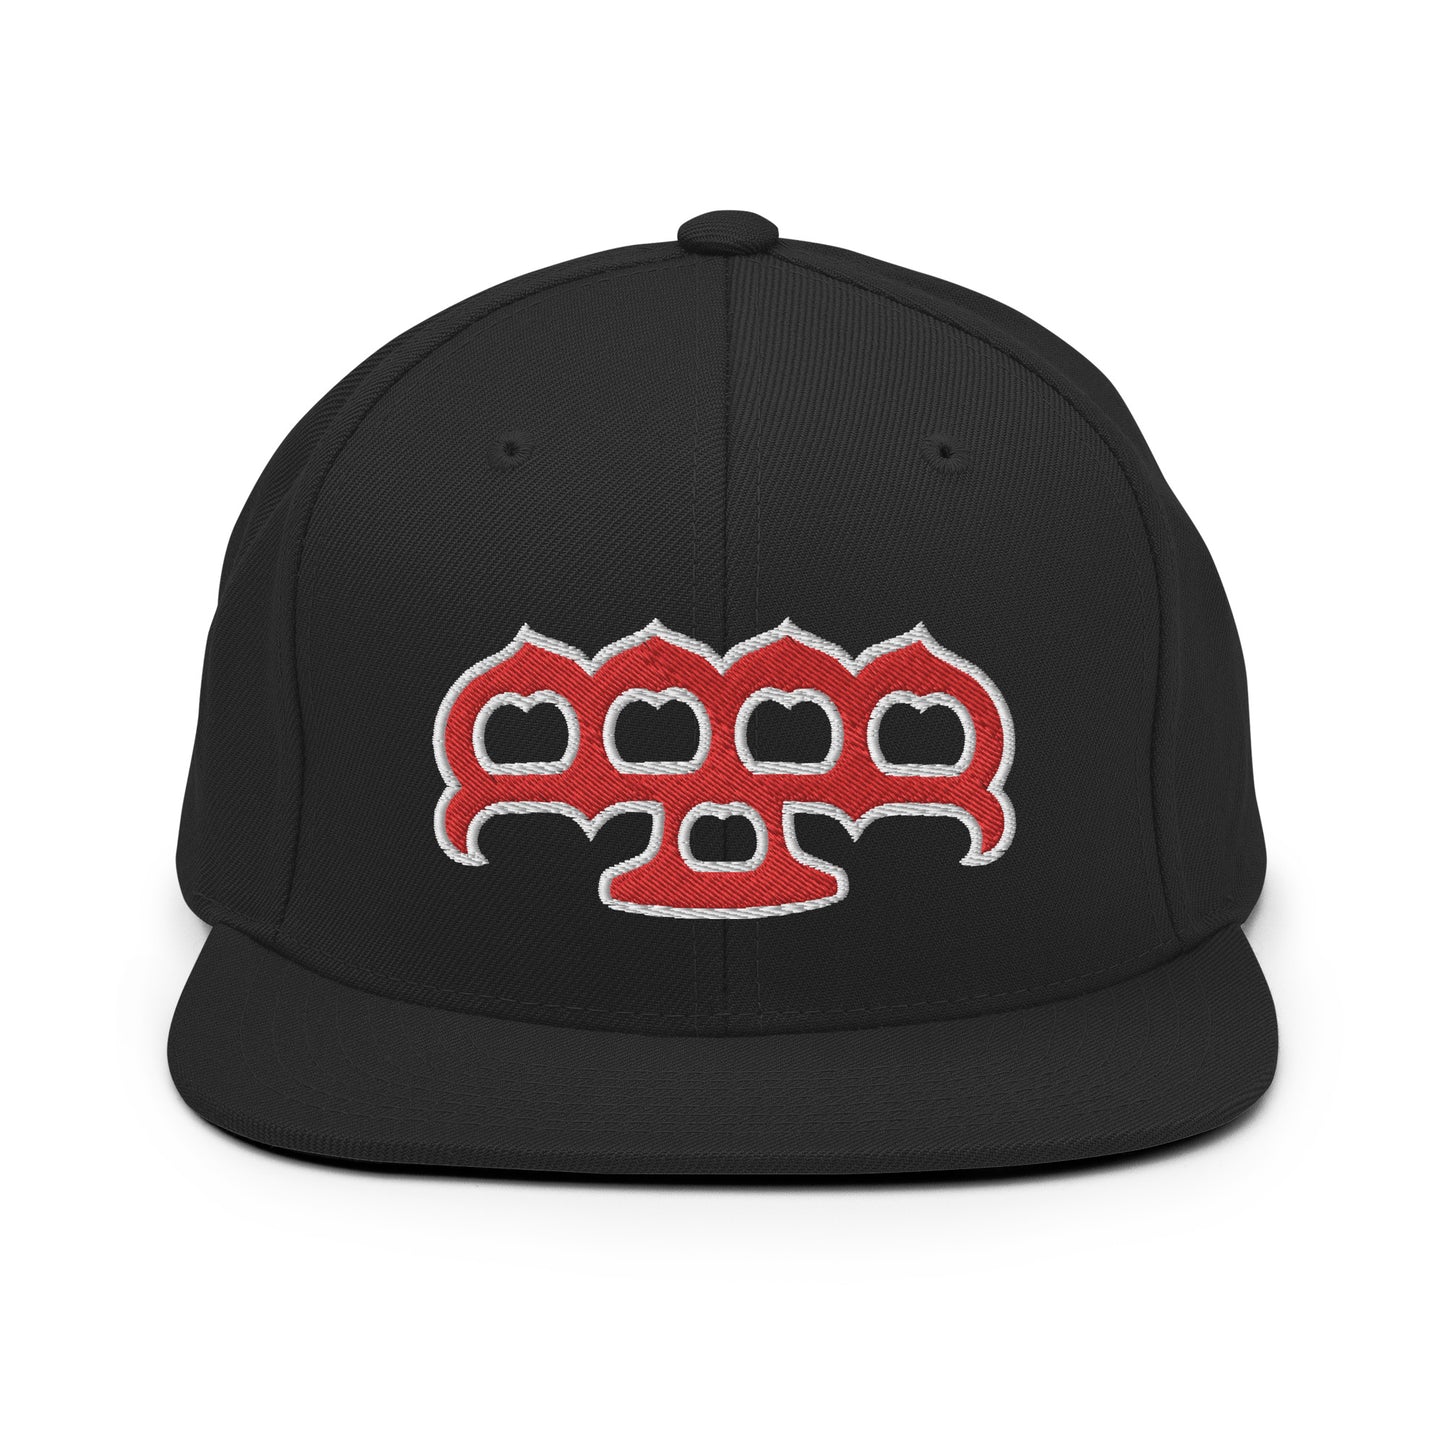 Red Knux snapback hat